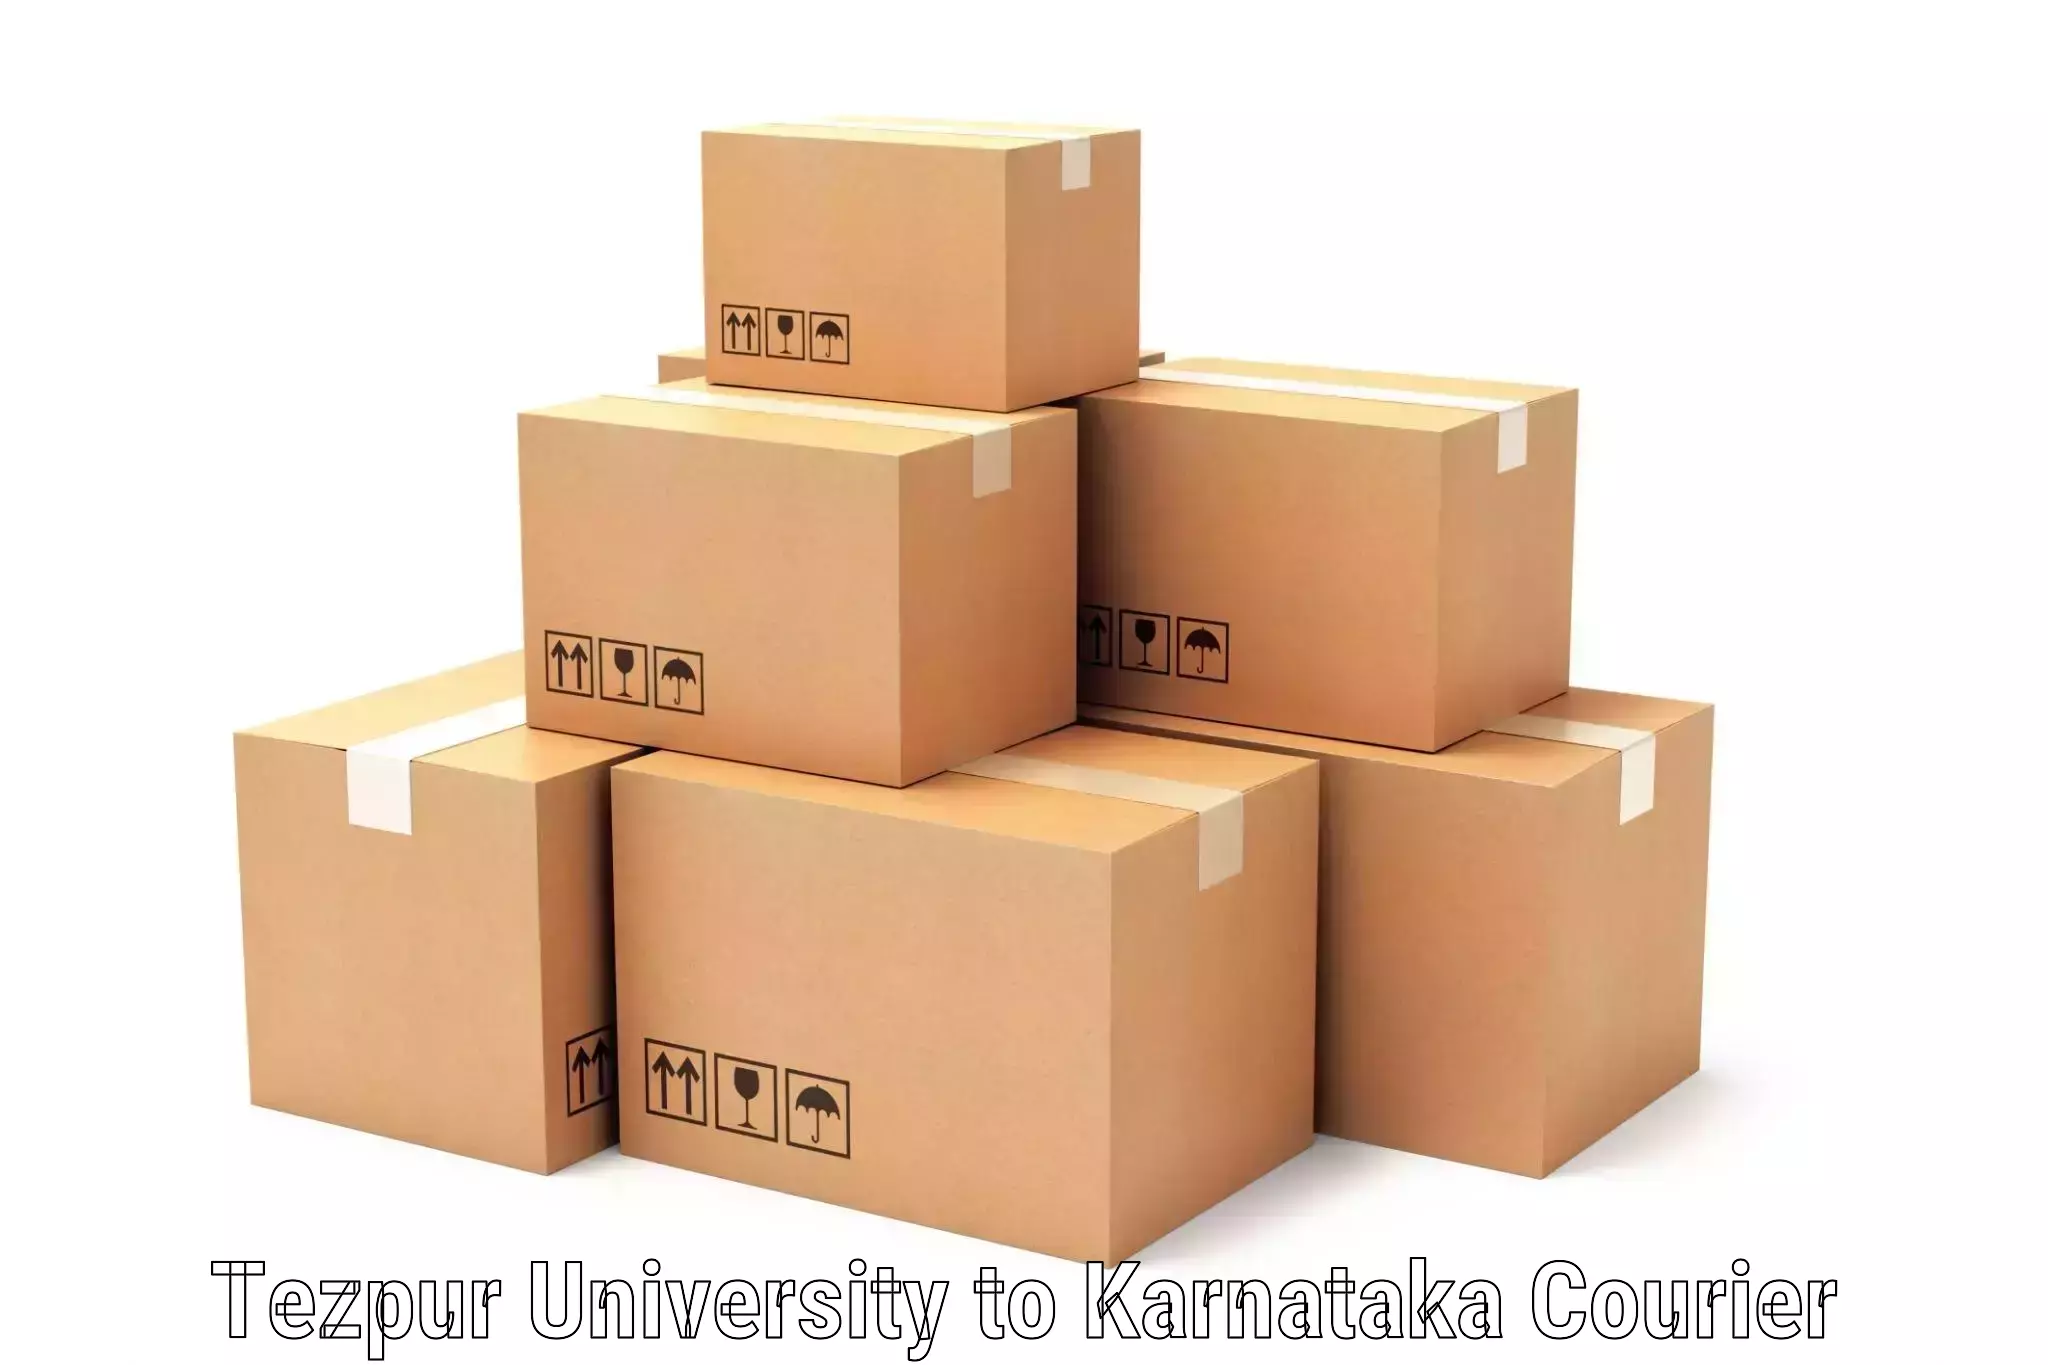 Cash on delivery service Tezpur University to Ankola